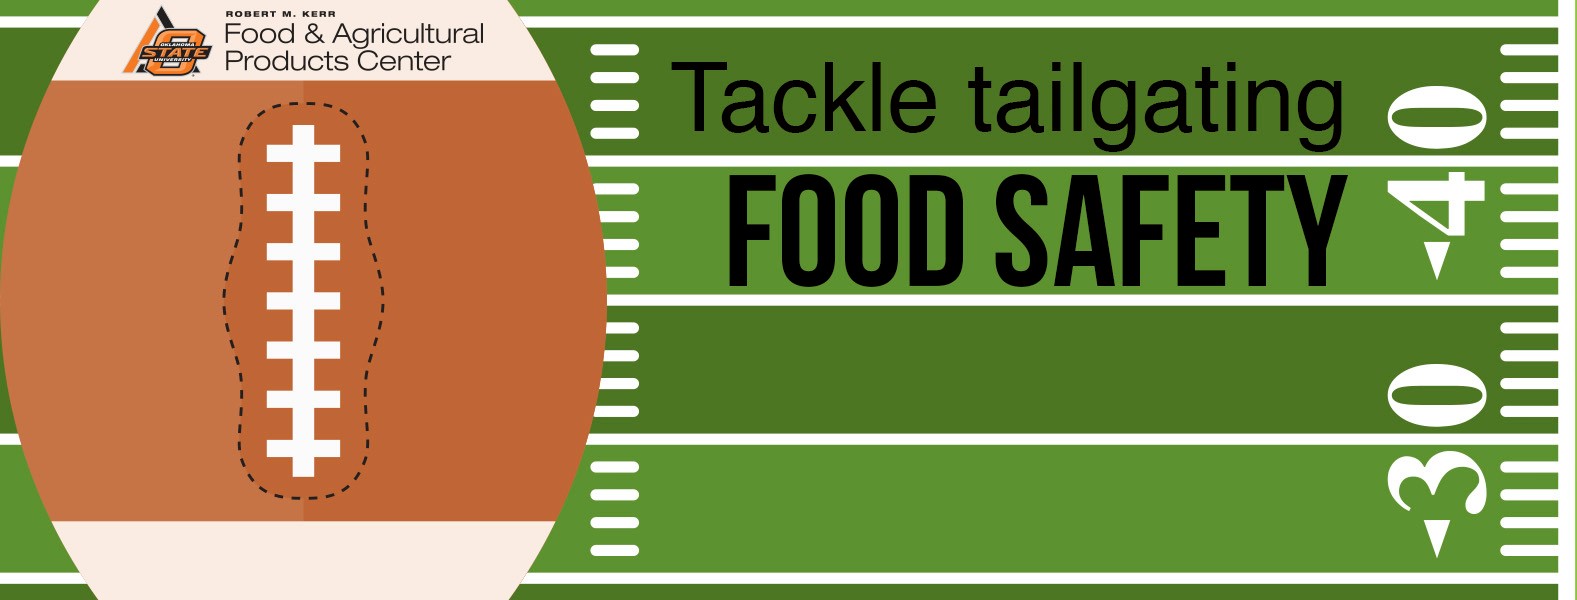 FAPC Tackles Food Safety During Tailgating Season